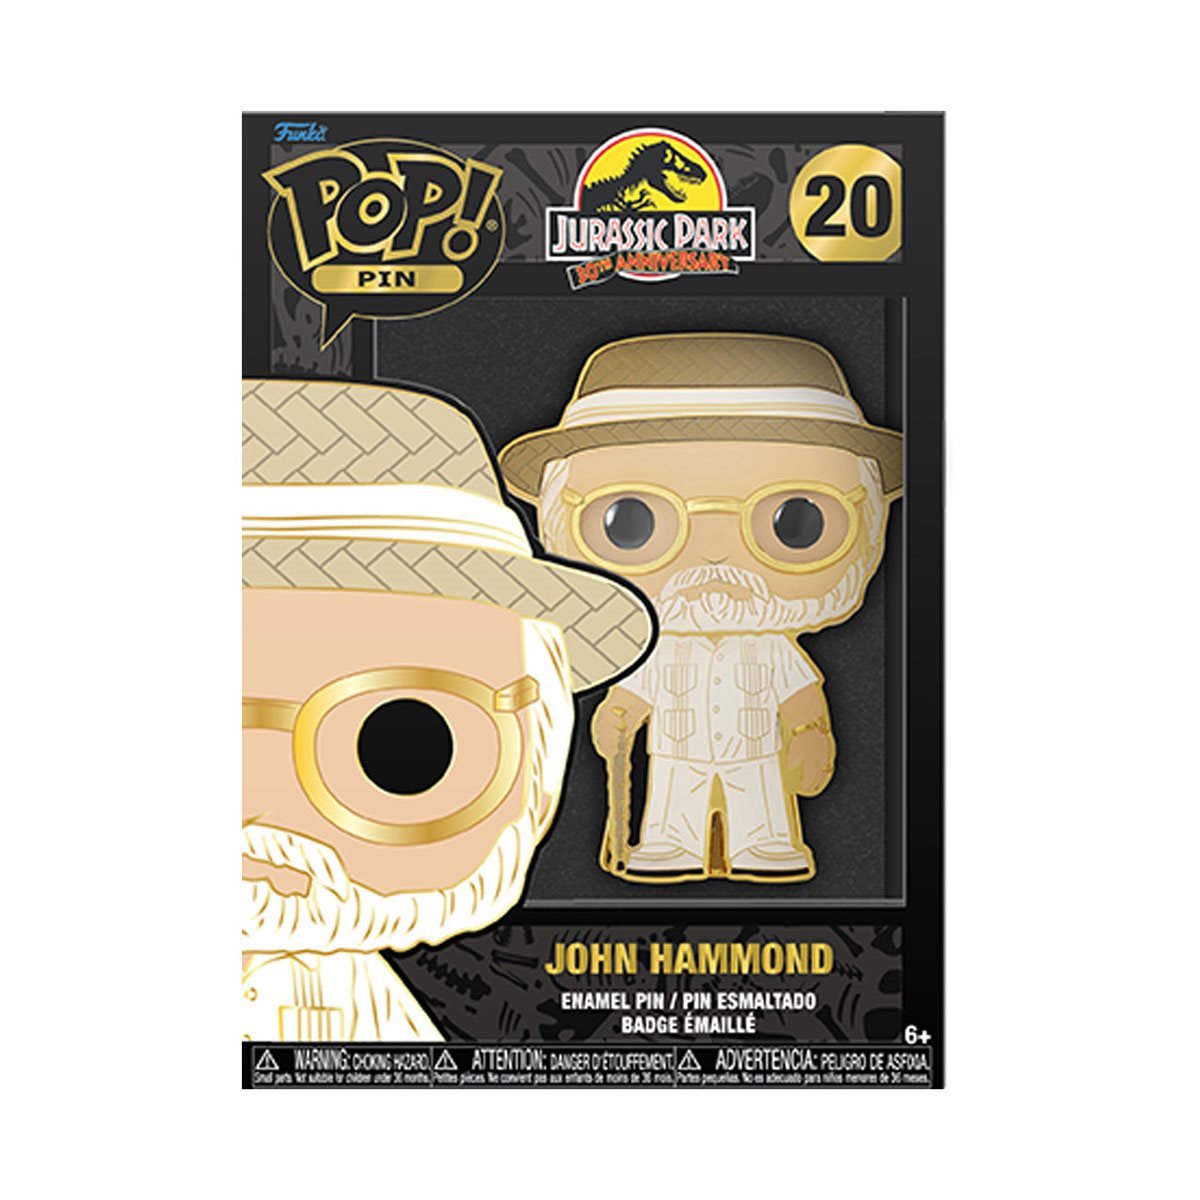 Funko Pop! Jurassic Park John Hammond Large Enamel Pin #20 - *PREORDER*